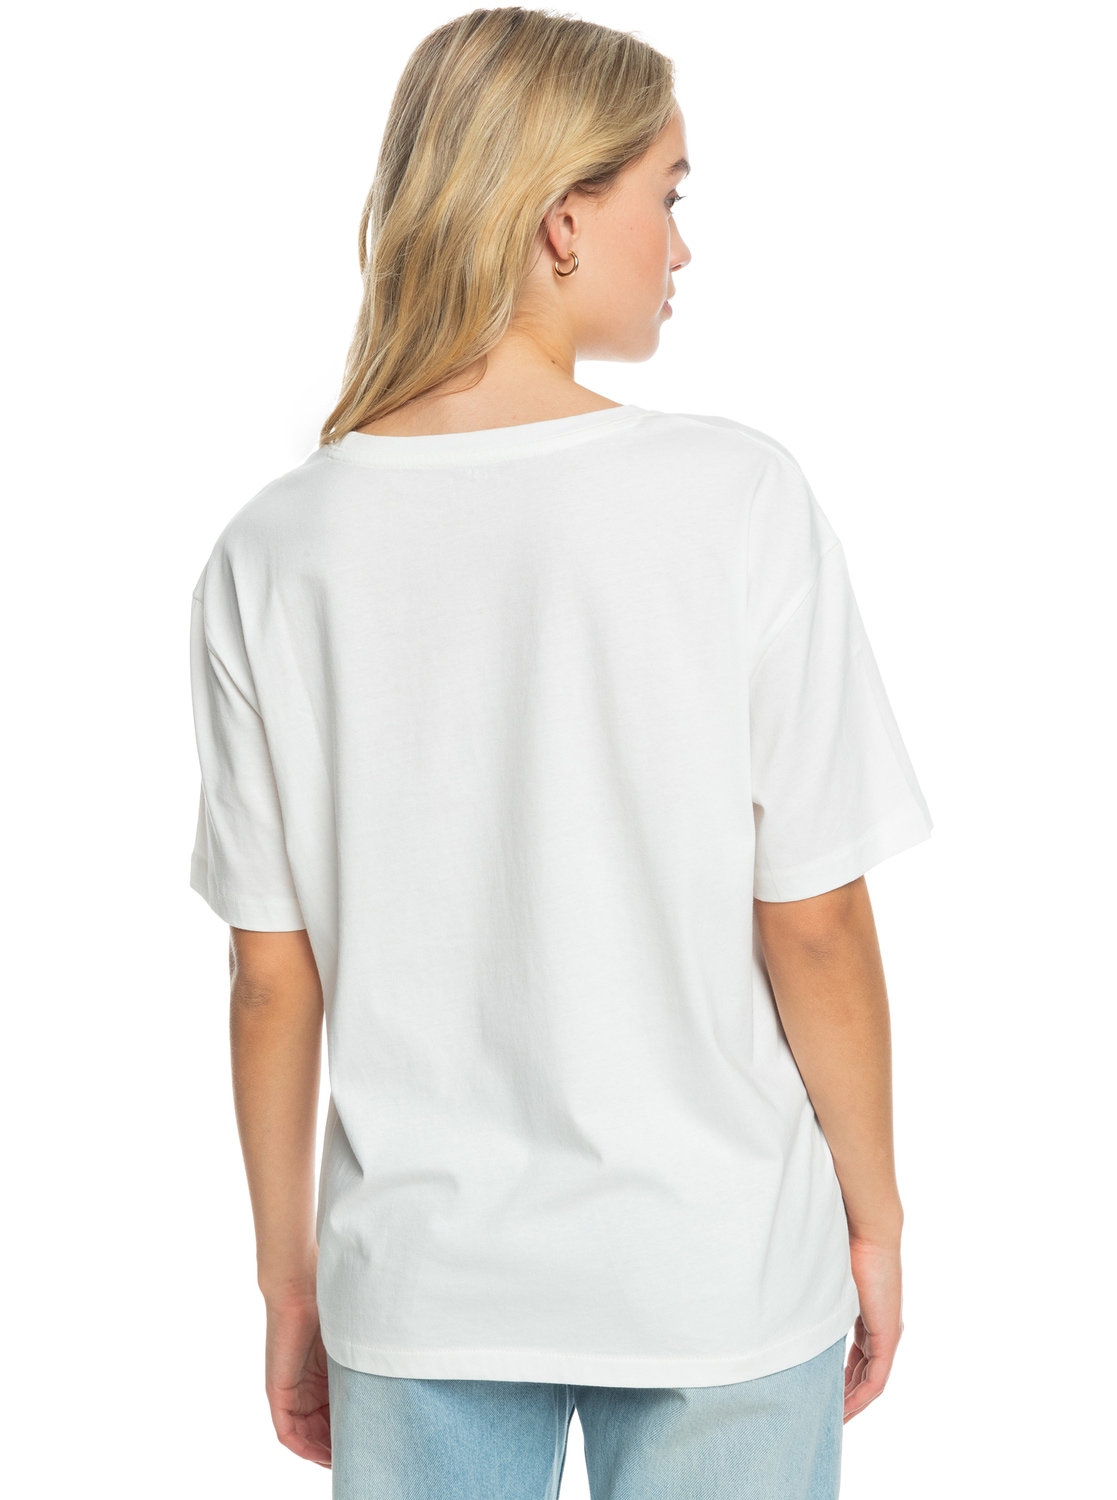 Jelmoli-Versand online »Barrel Day« bei Roxy T-Shirt Schweiz bestellen